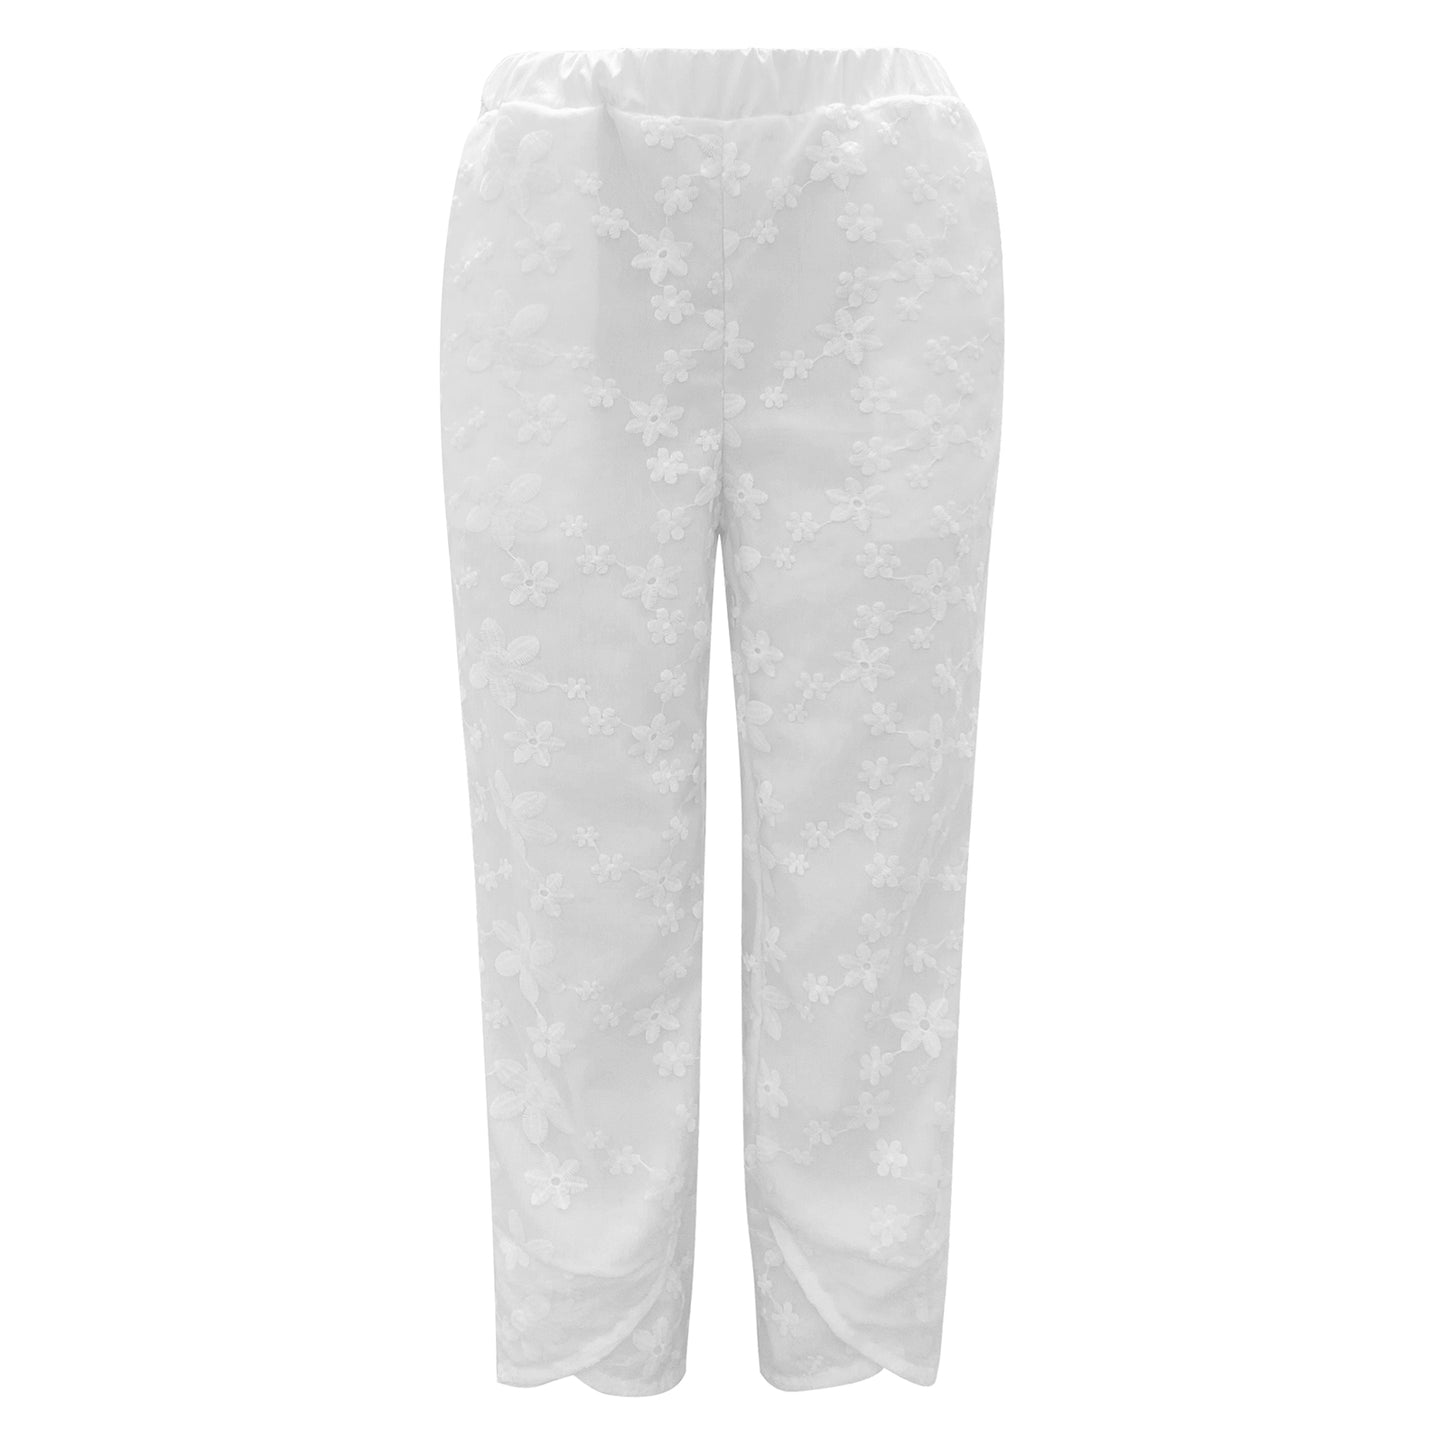 Spring Summer Split Cotton Linen Lace up Casual Pants for Women